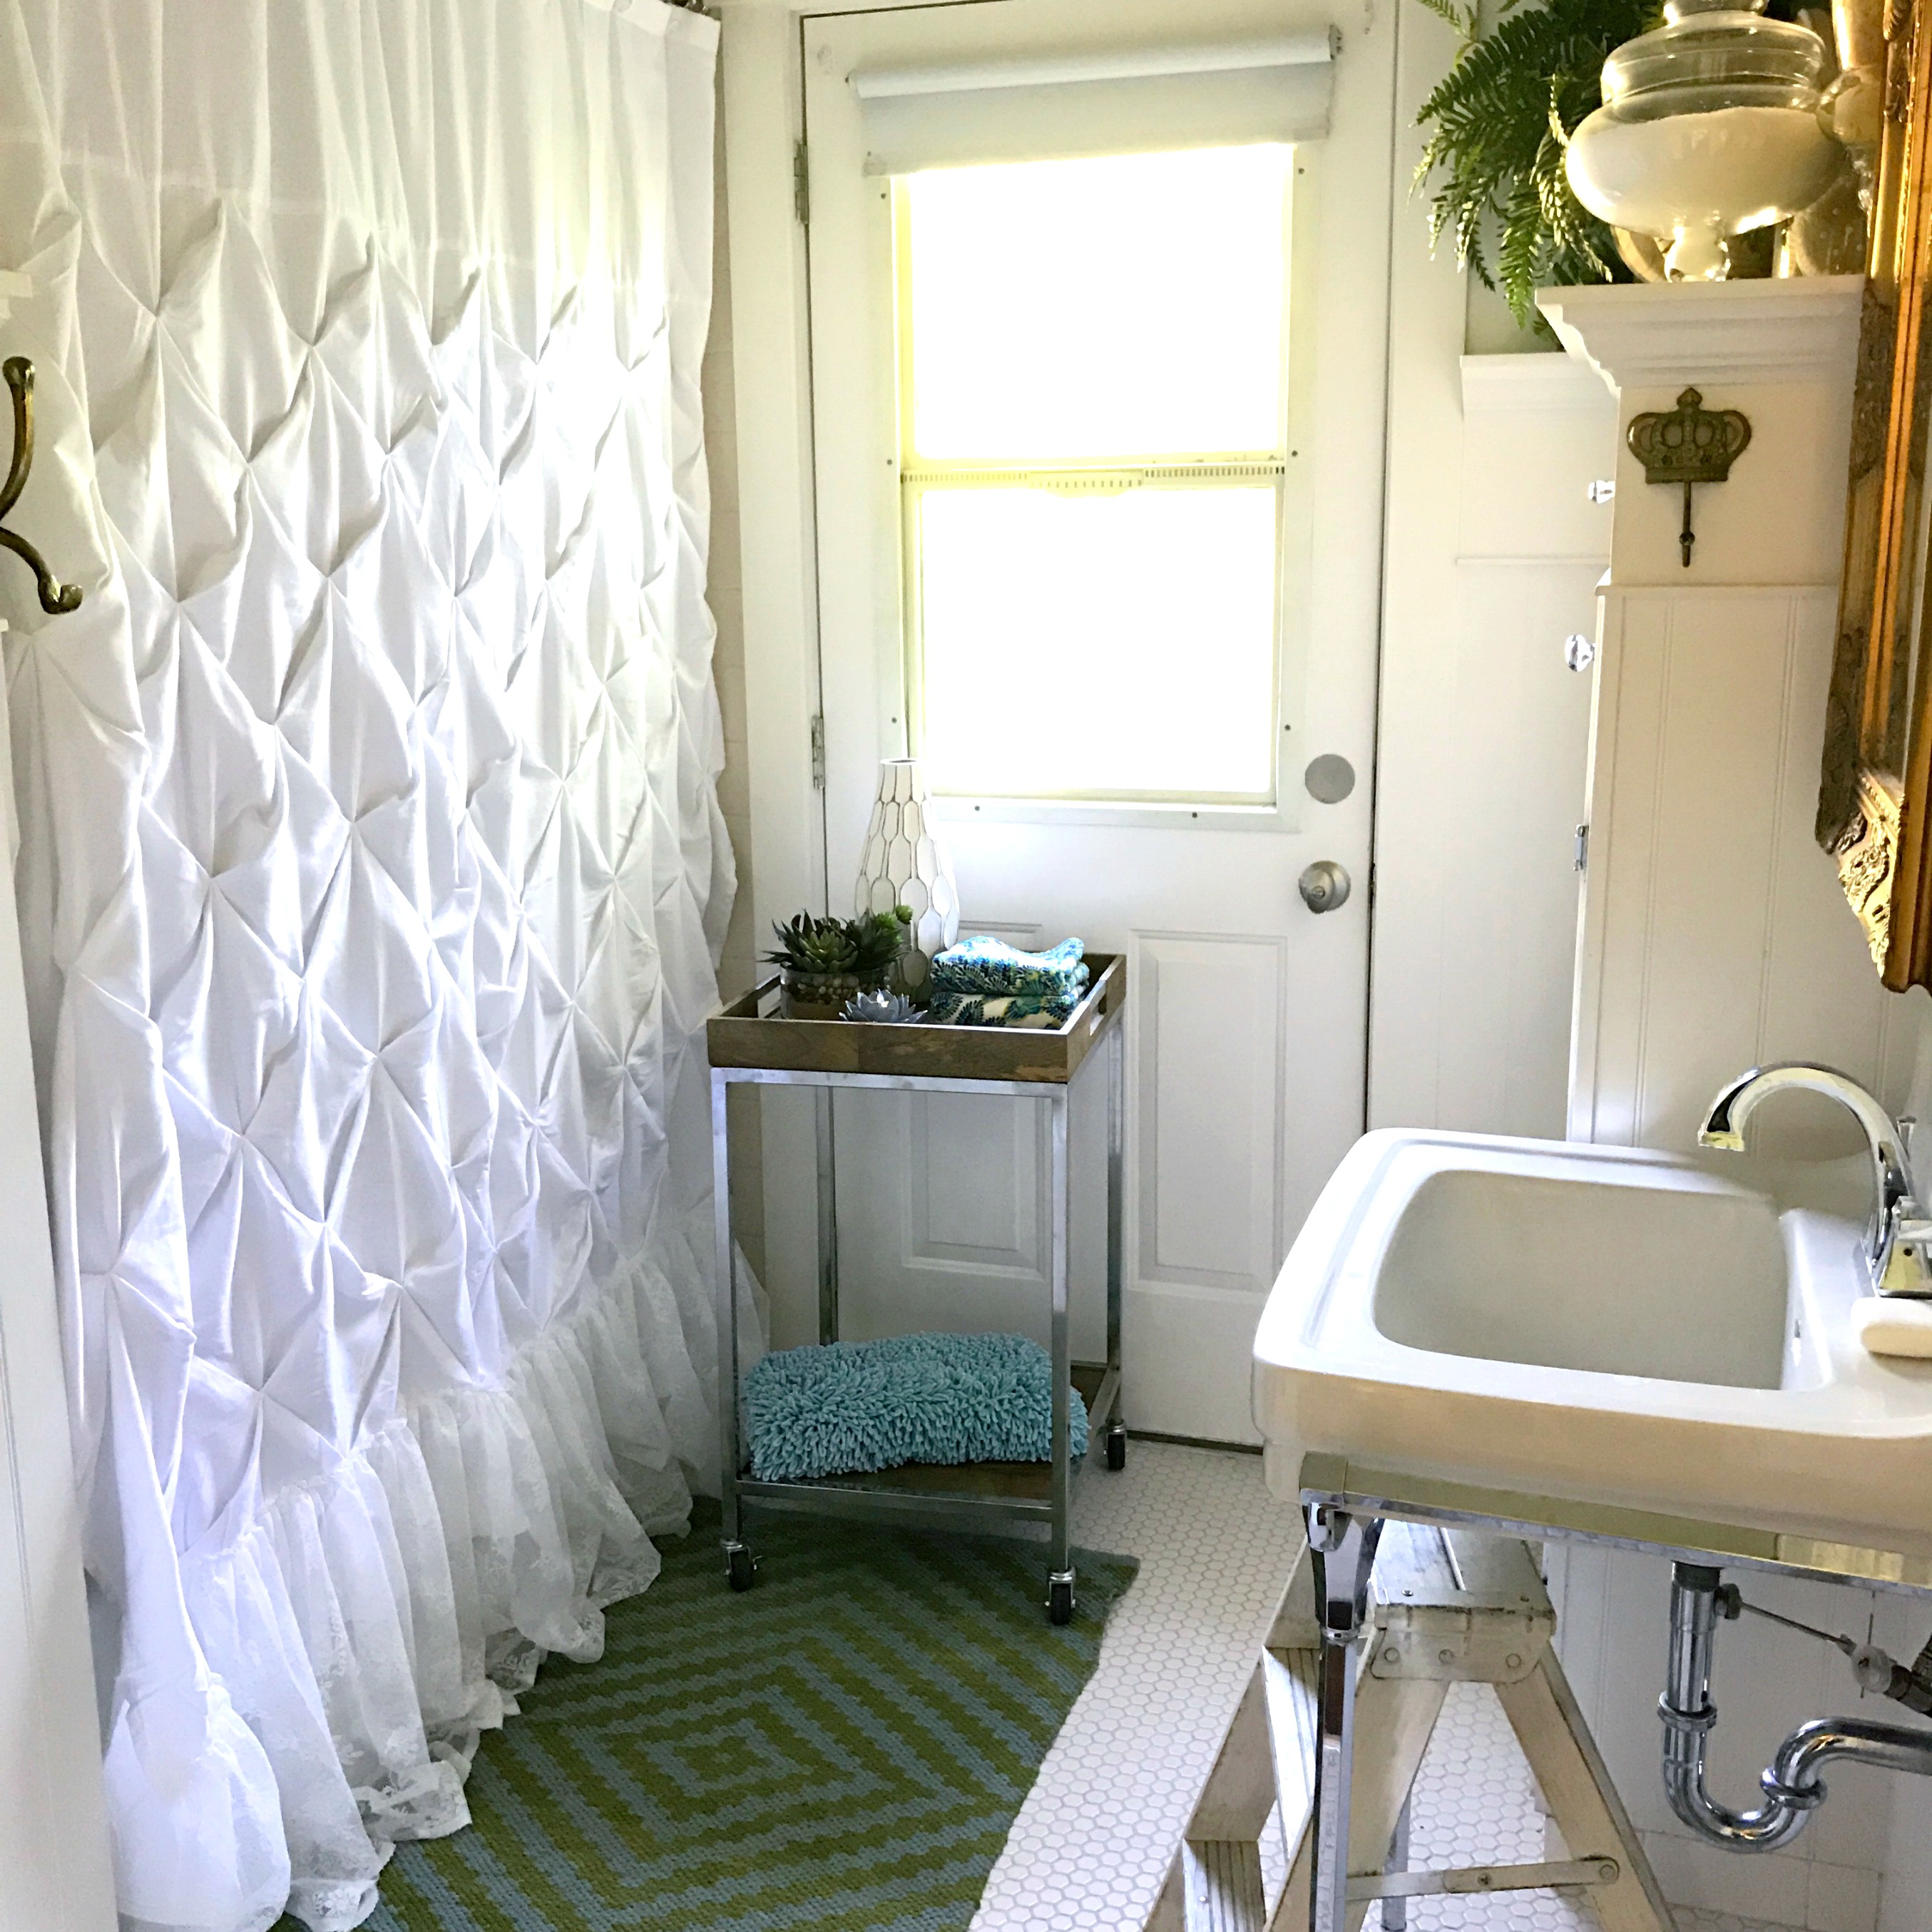 Updating a Small Farmhouse Bathroom